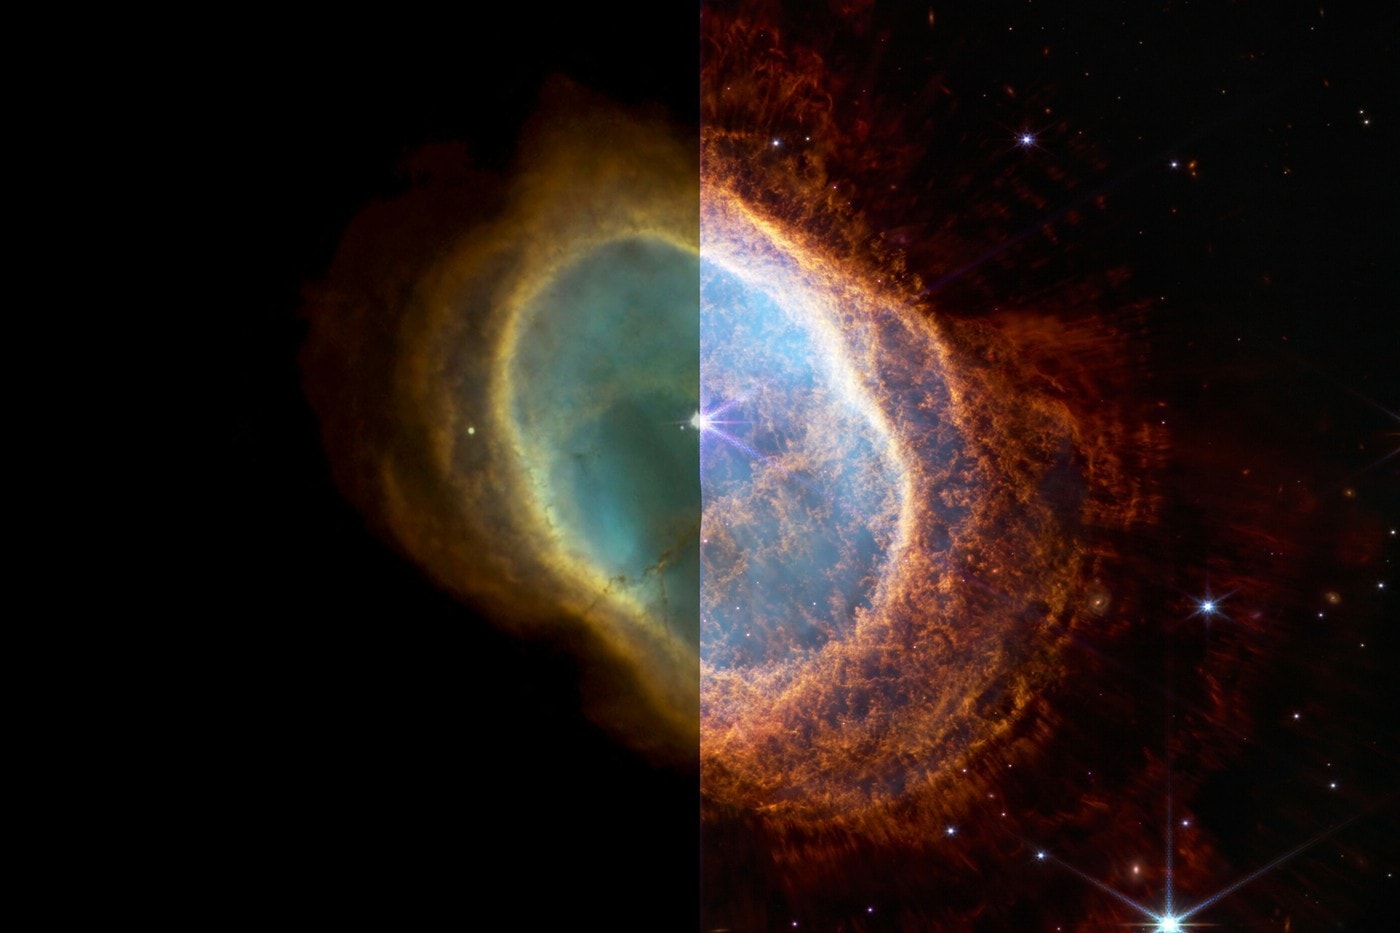 nasa James webb space telescope vs hubble telescope comparison